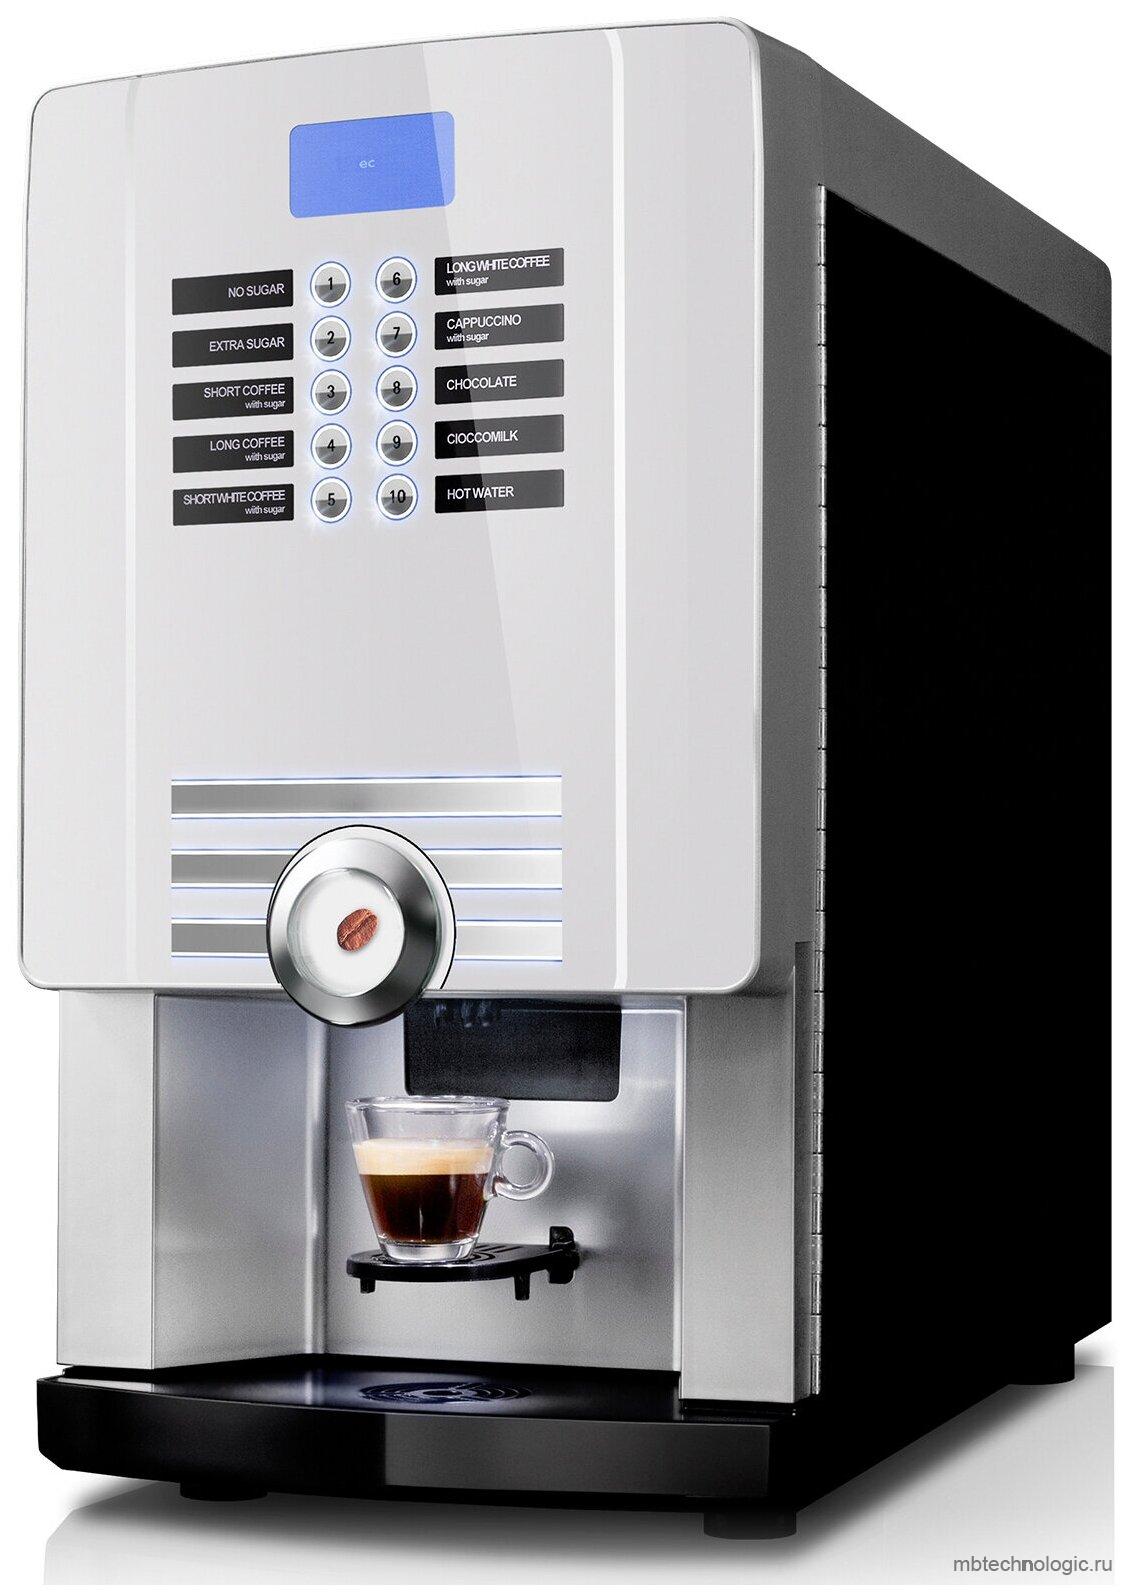 Rheavendors eC PRO E3 R1 9005/9006 F.F.B., Coffee TO GO